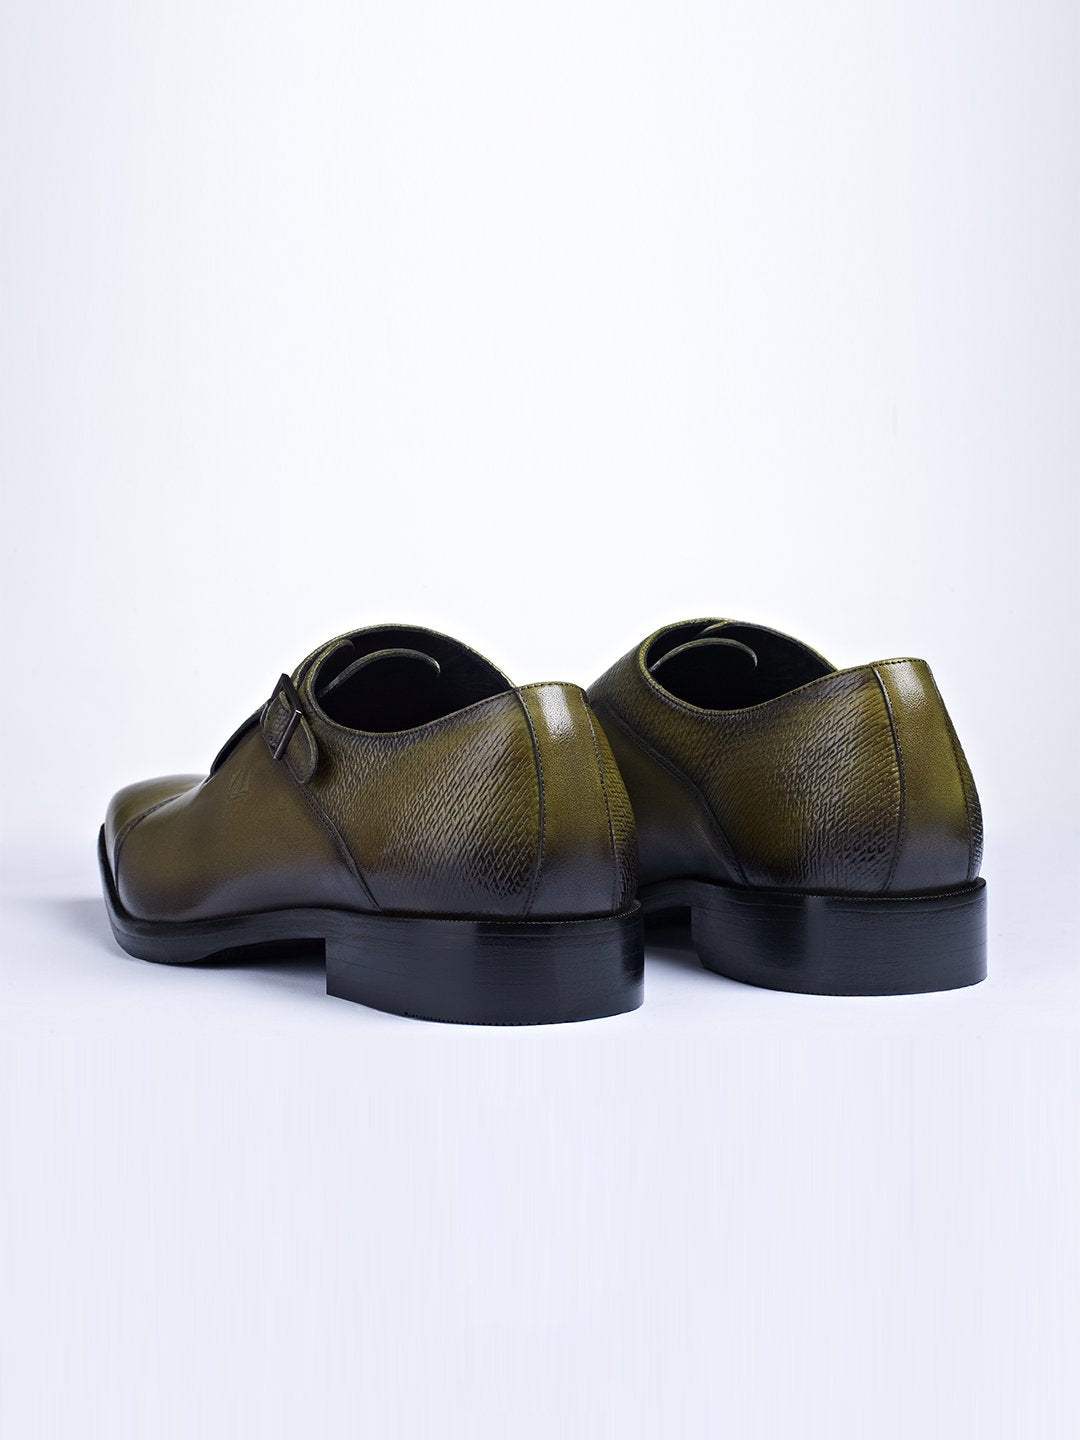 Single Buckle Monk Shoes With Zm Embossed Detail (Olive) - Zest Mélange 